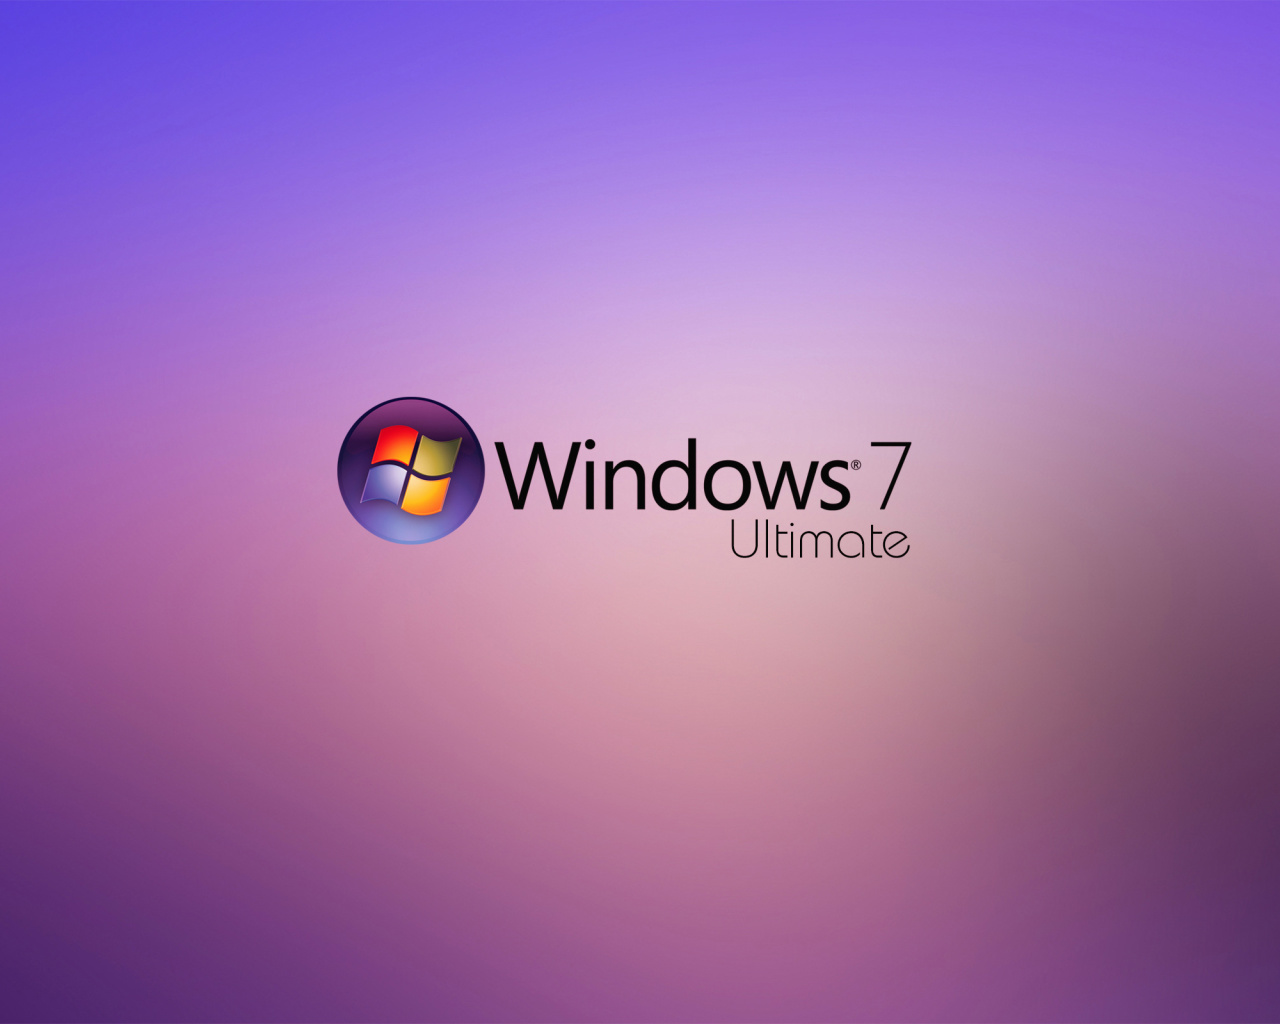 Das Windows 7 Ultimate Wallpaper 1280x1024